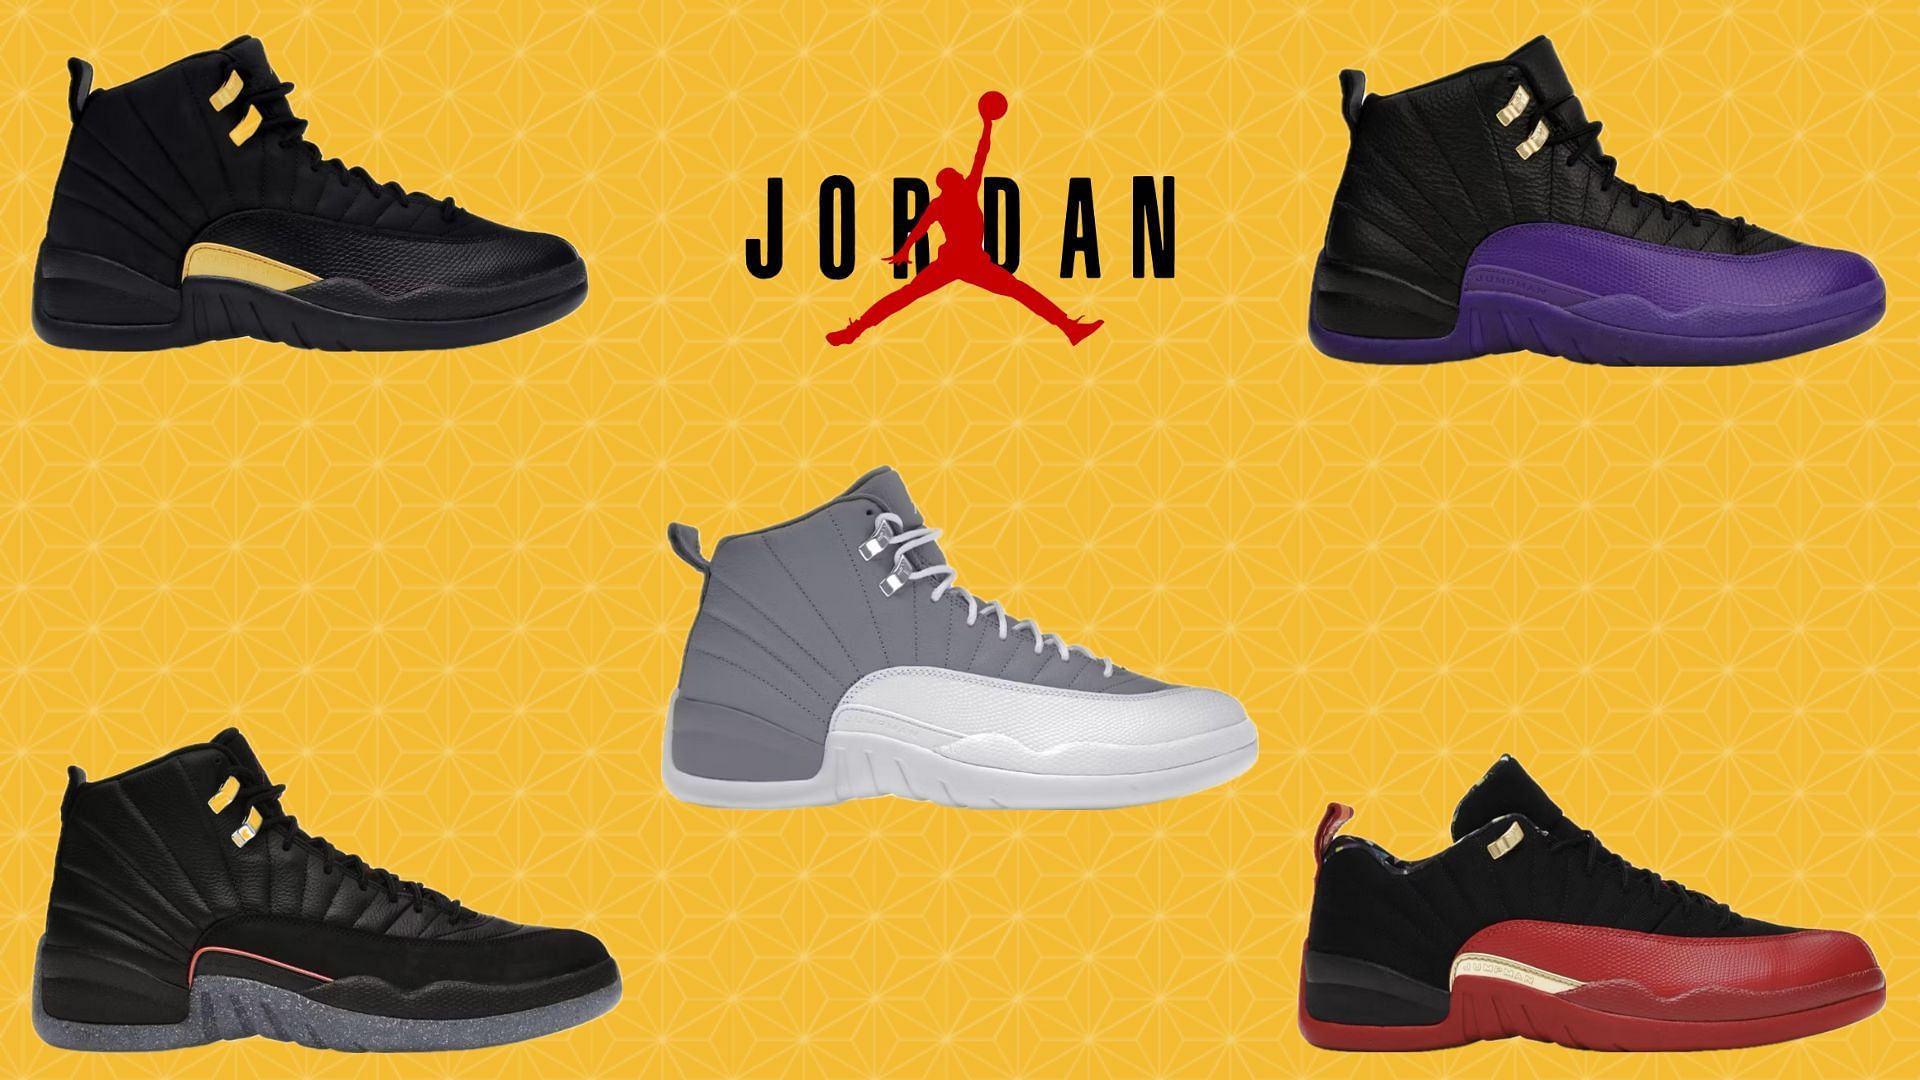 Cheapest Air Jordan 12 footwear options to choose from in 2023 (Image via Nike)